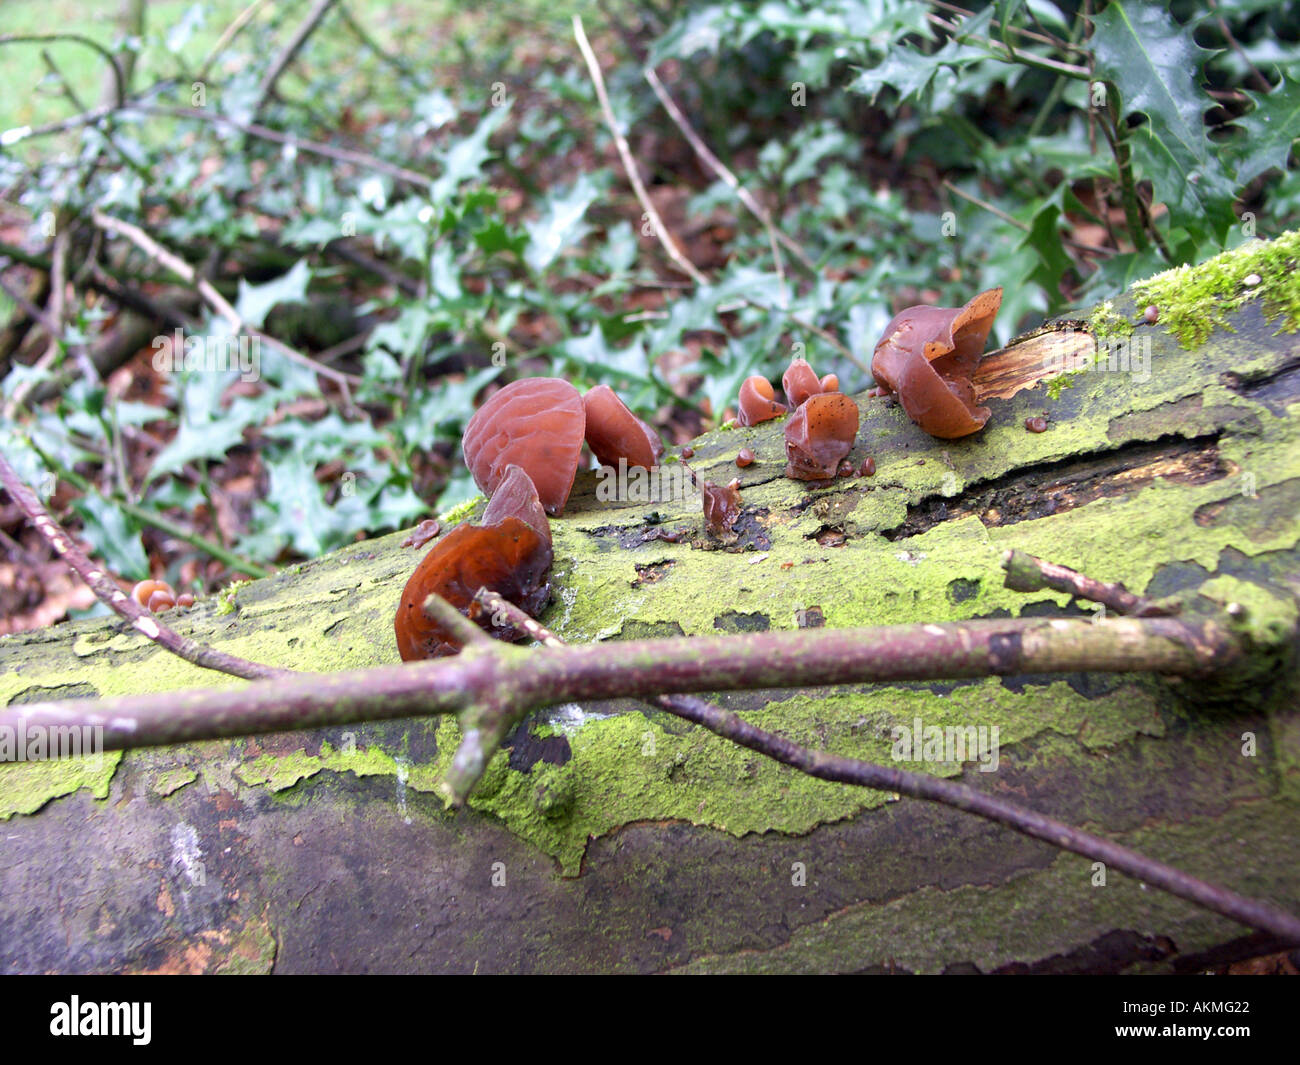 Jews Ear Fungus (Auricula Judae) growing on a fallen tree trunk. Stock Photo